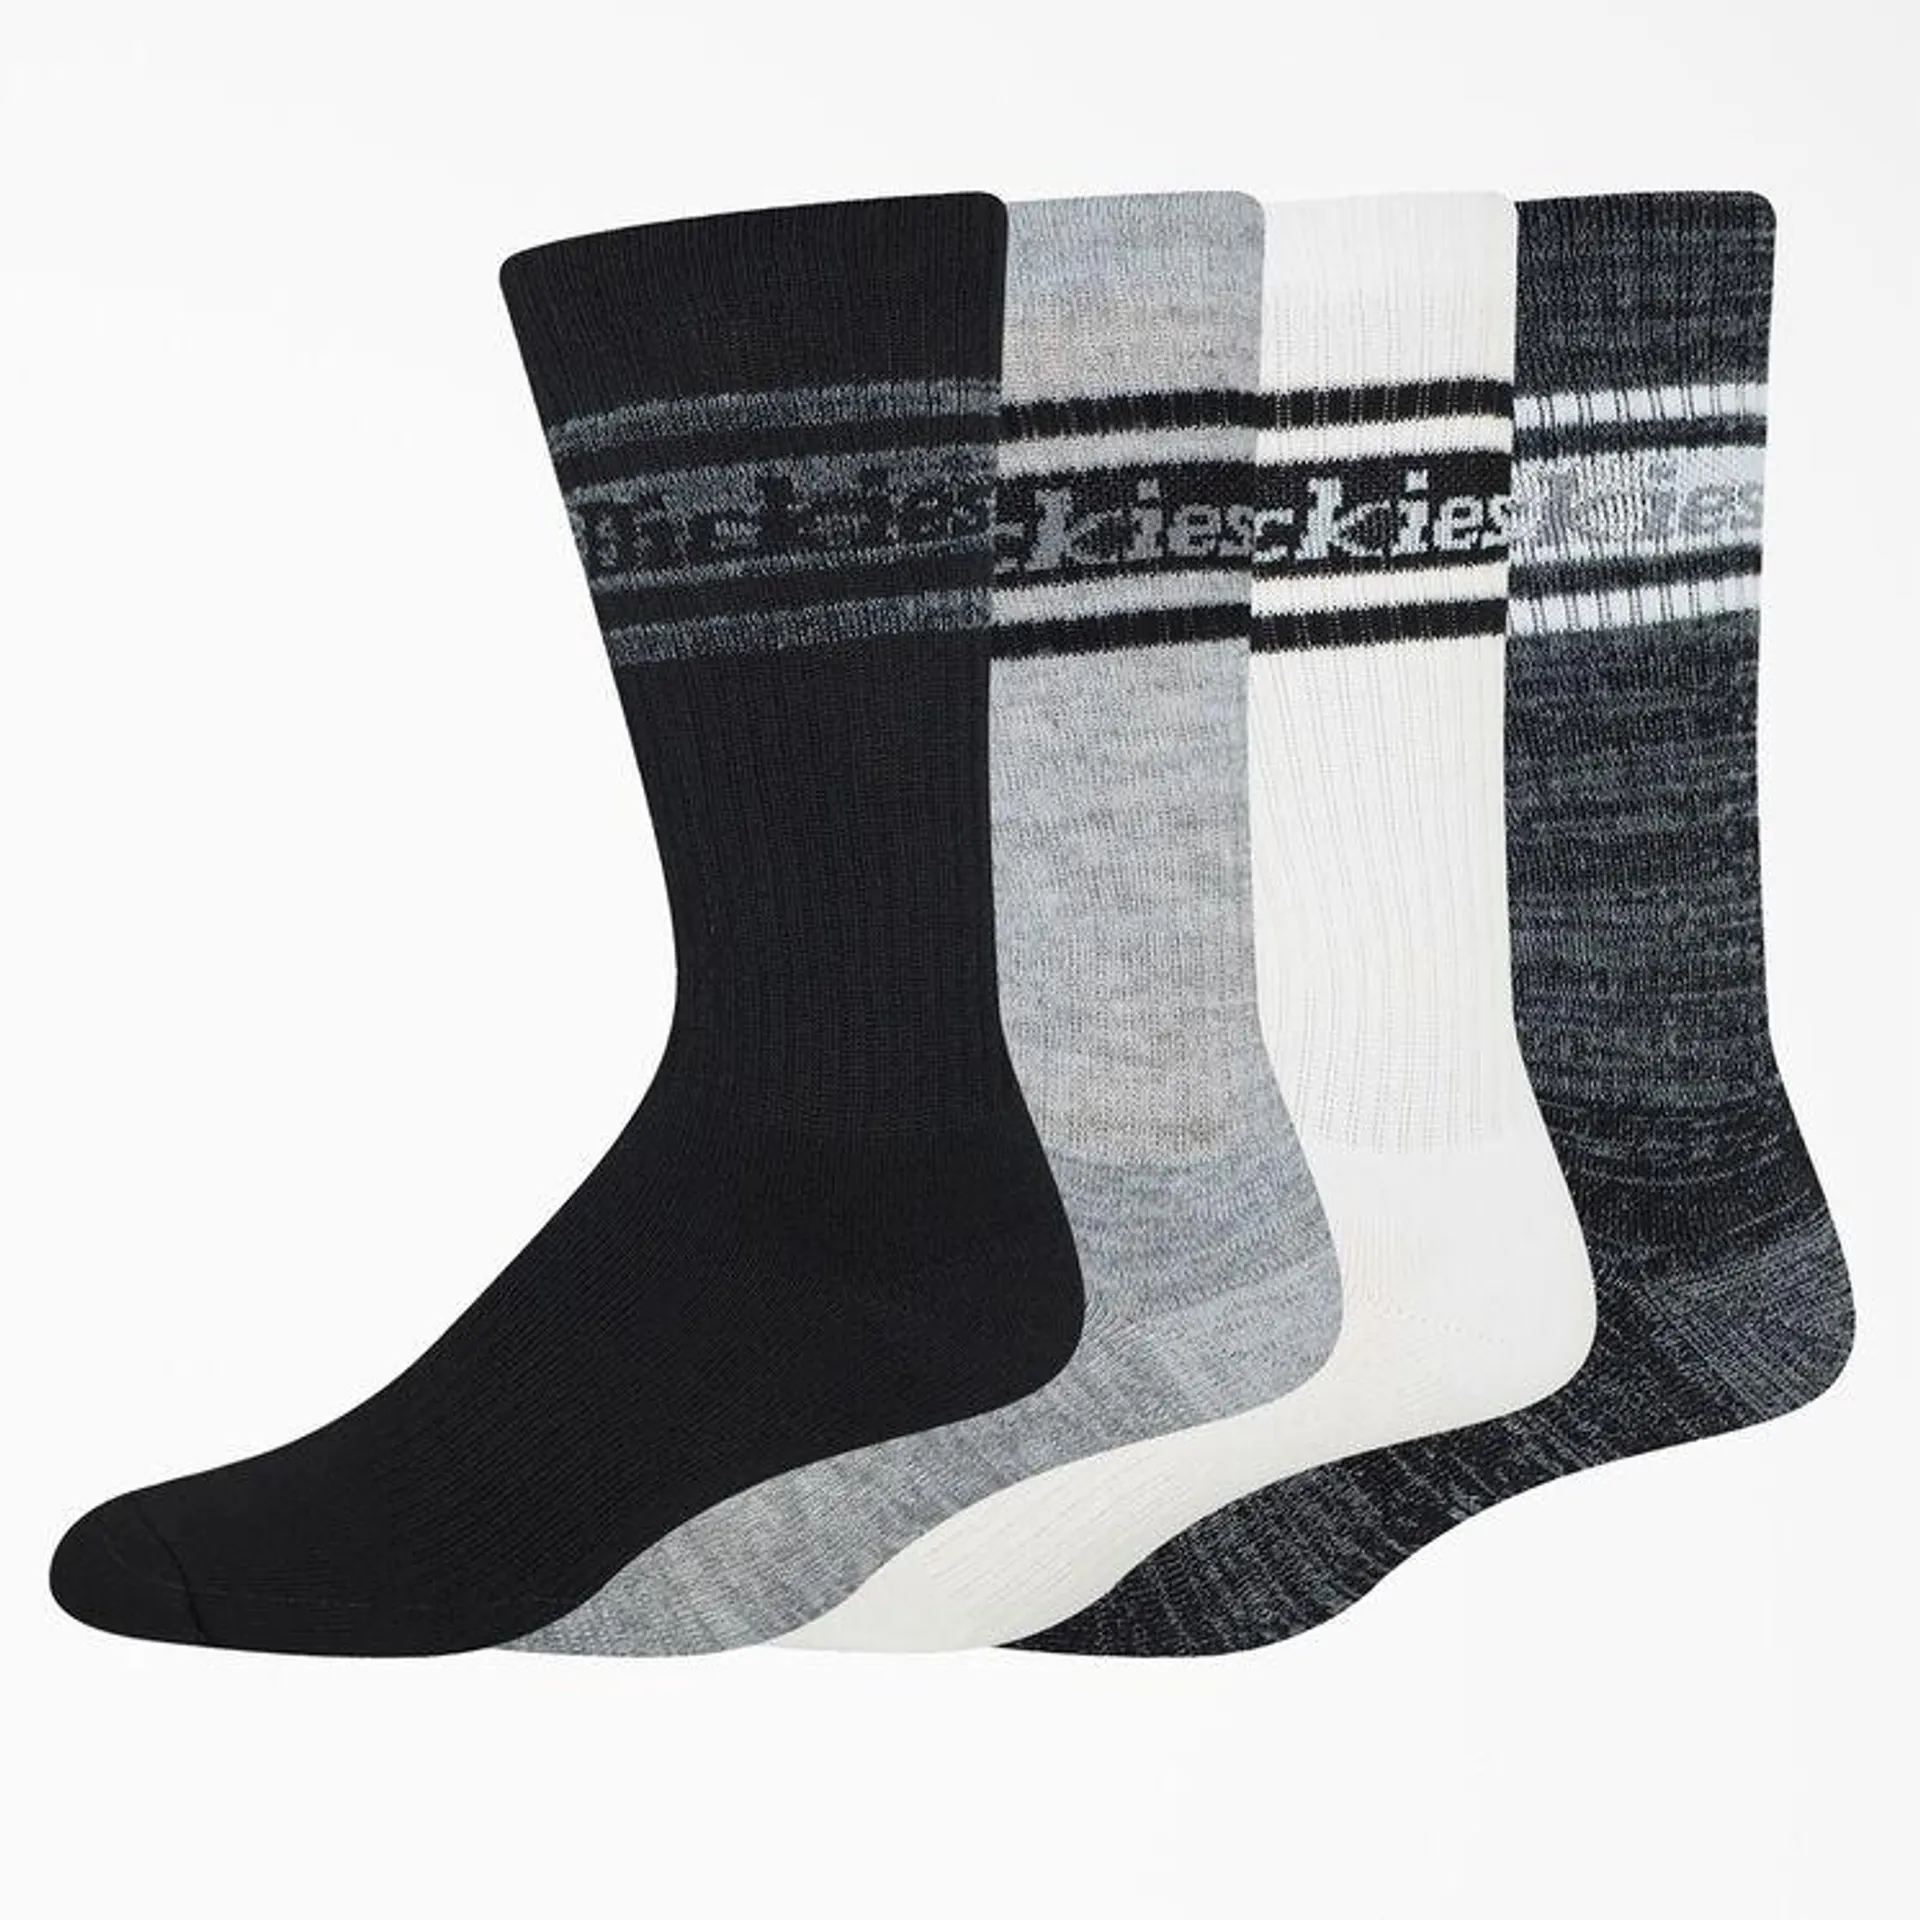 Rugby Stripe Socks, Size 6-12, 4-Pack, Multi/Gray Stripe